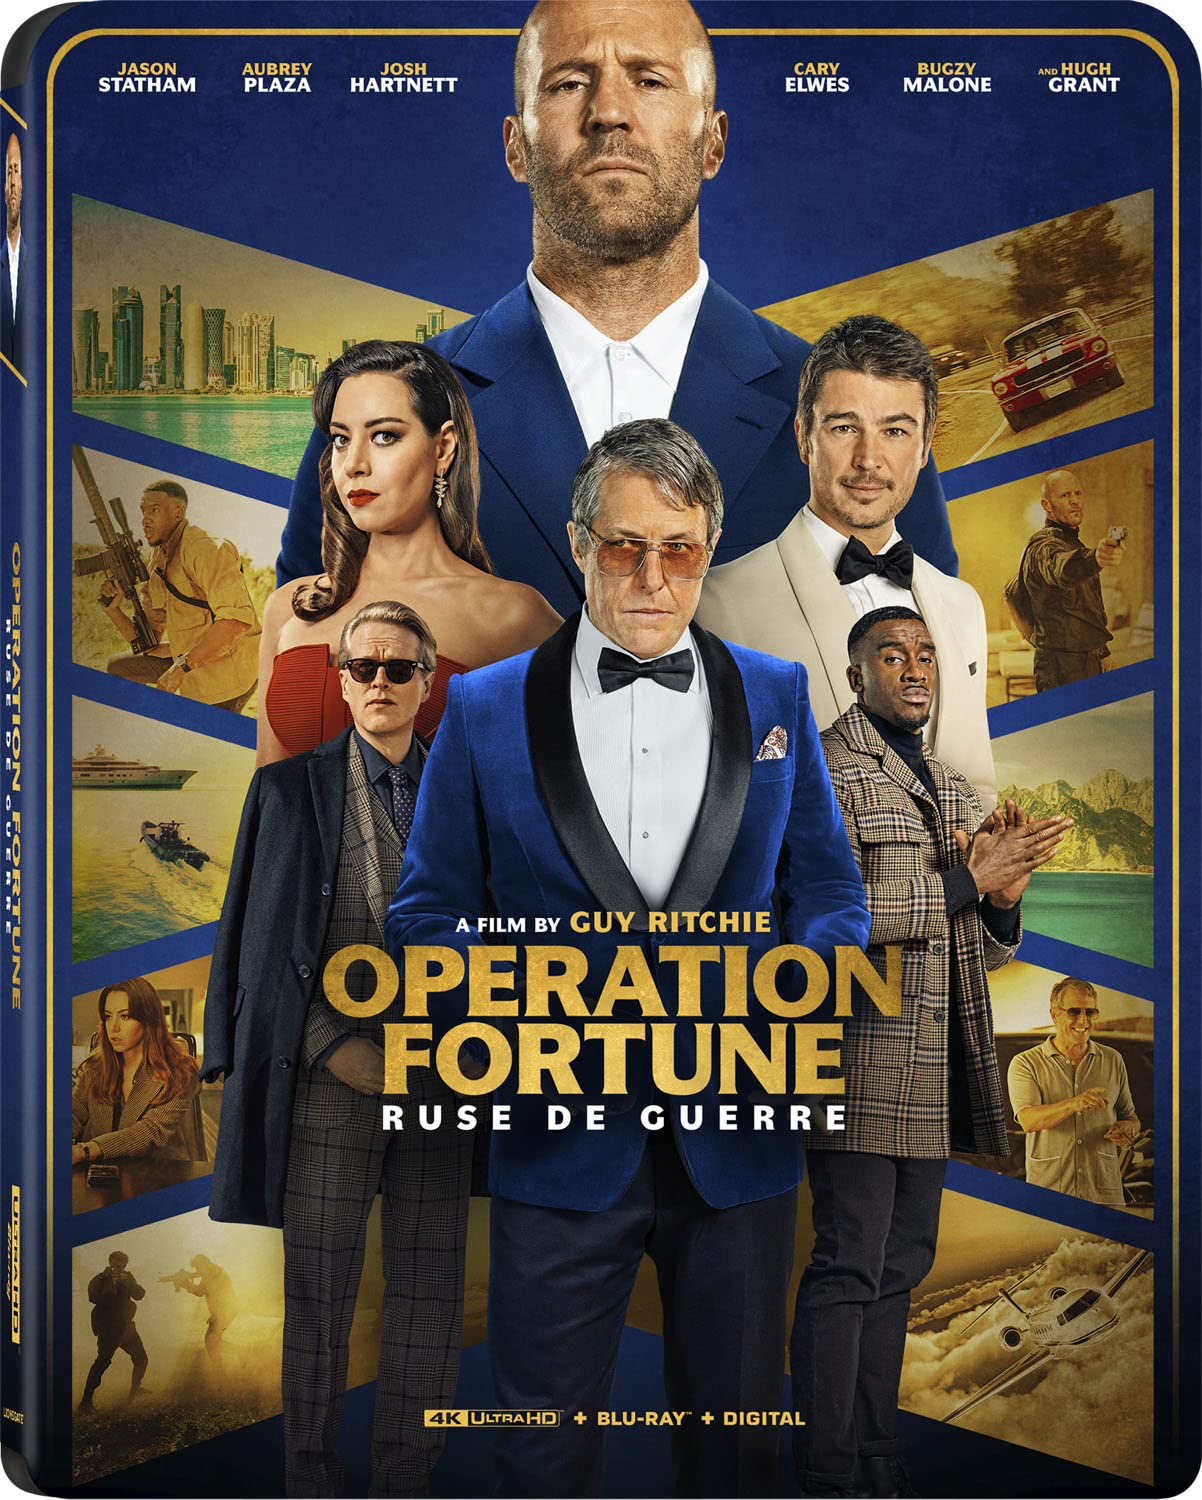 Operation Fortune: Ruse de Guerre 4k Blu-ray